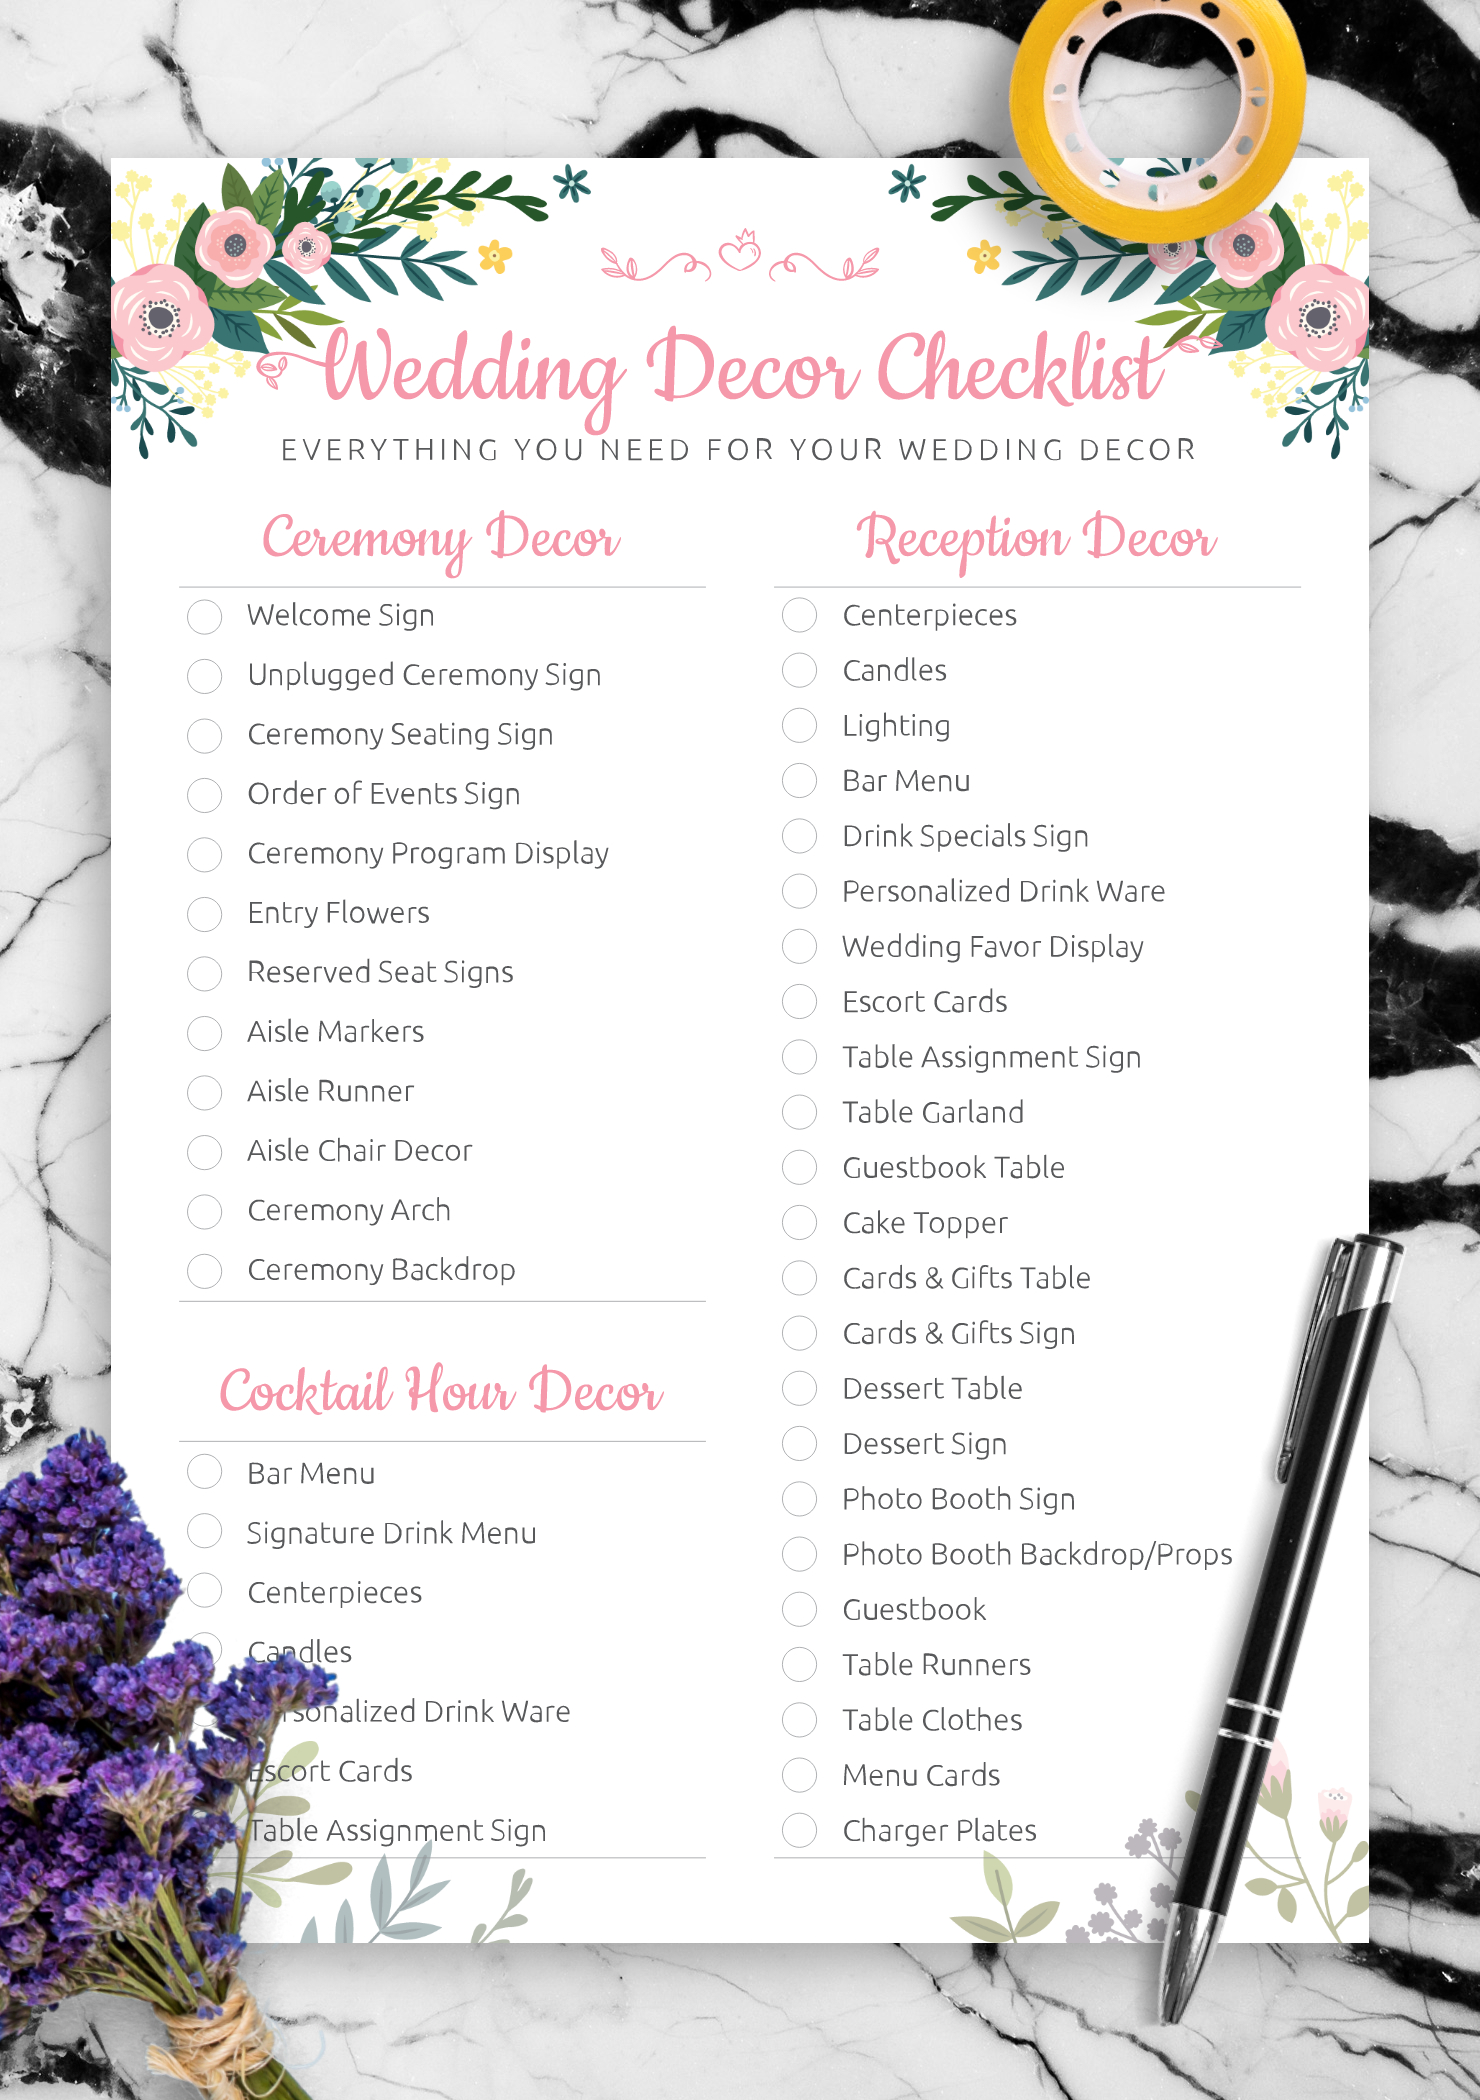 Download Printable Wedding Decor Checklist - Shabby Chic Style Pdf with Free Printable Wedding Decorations